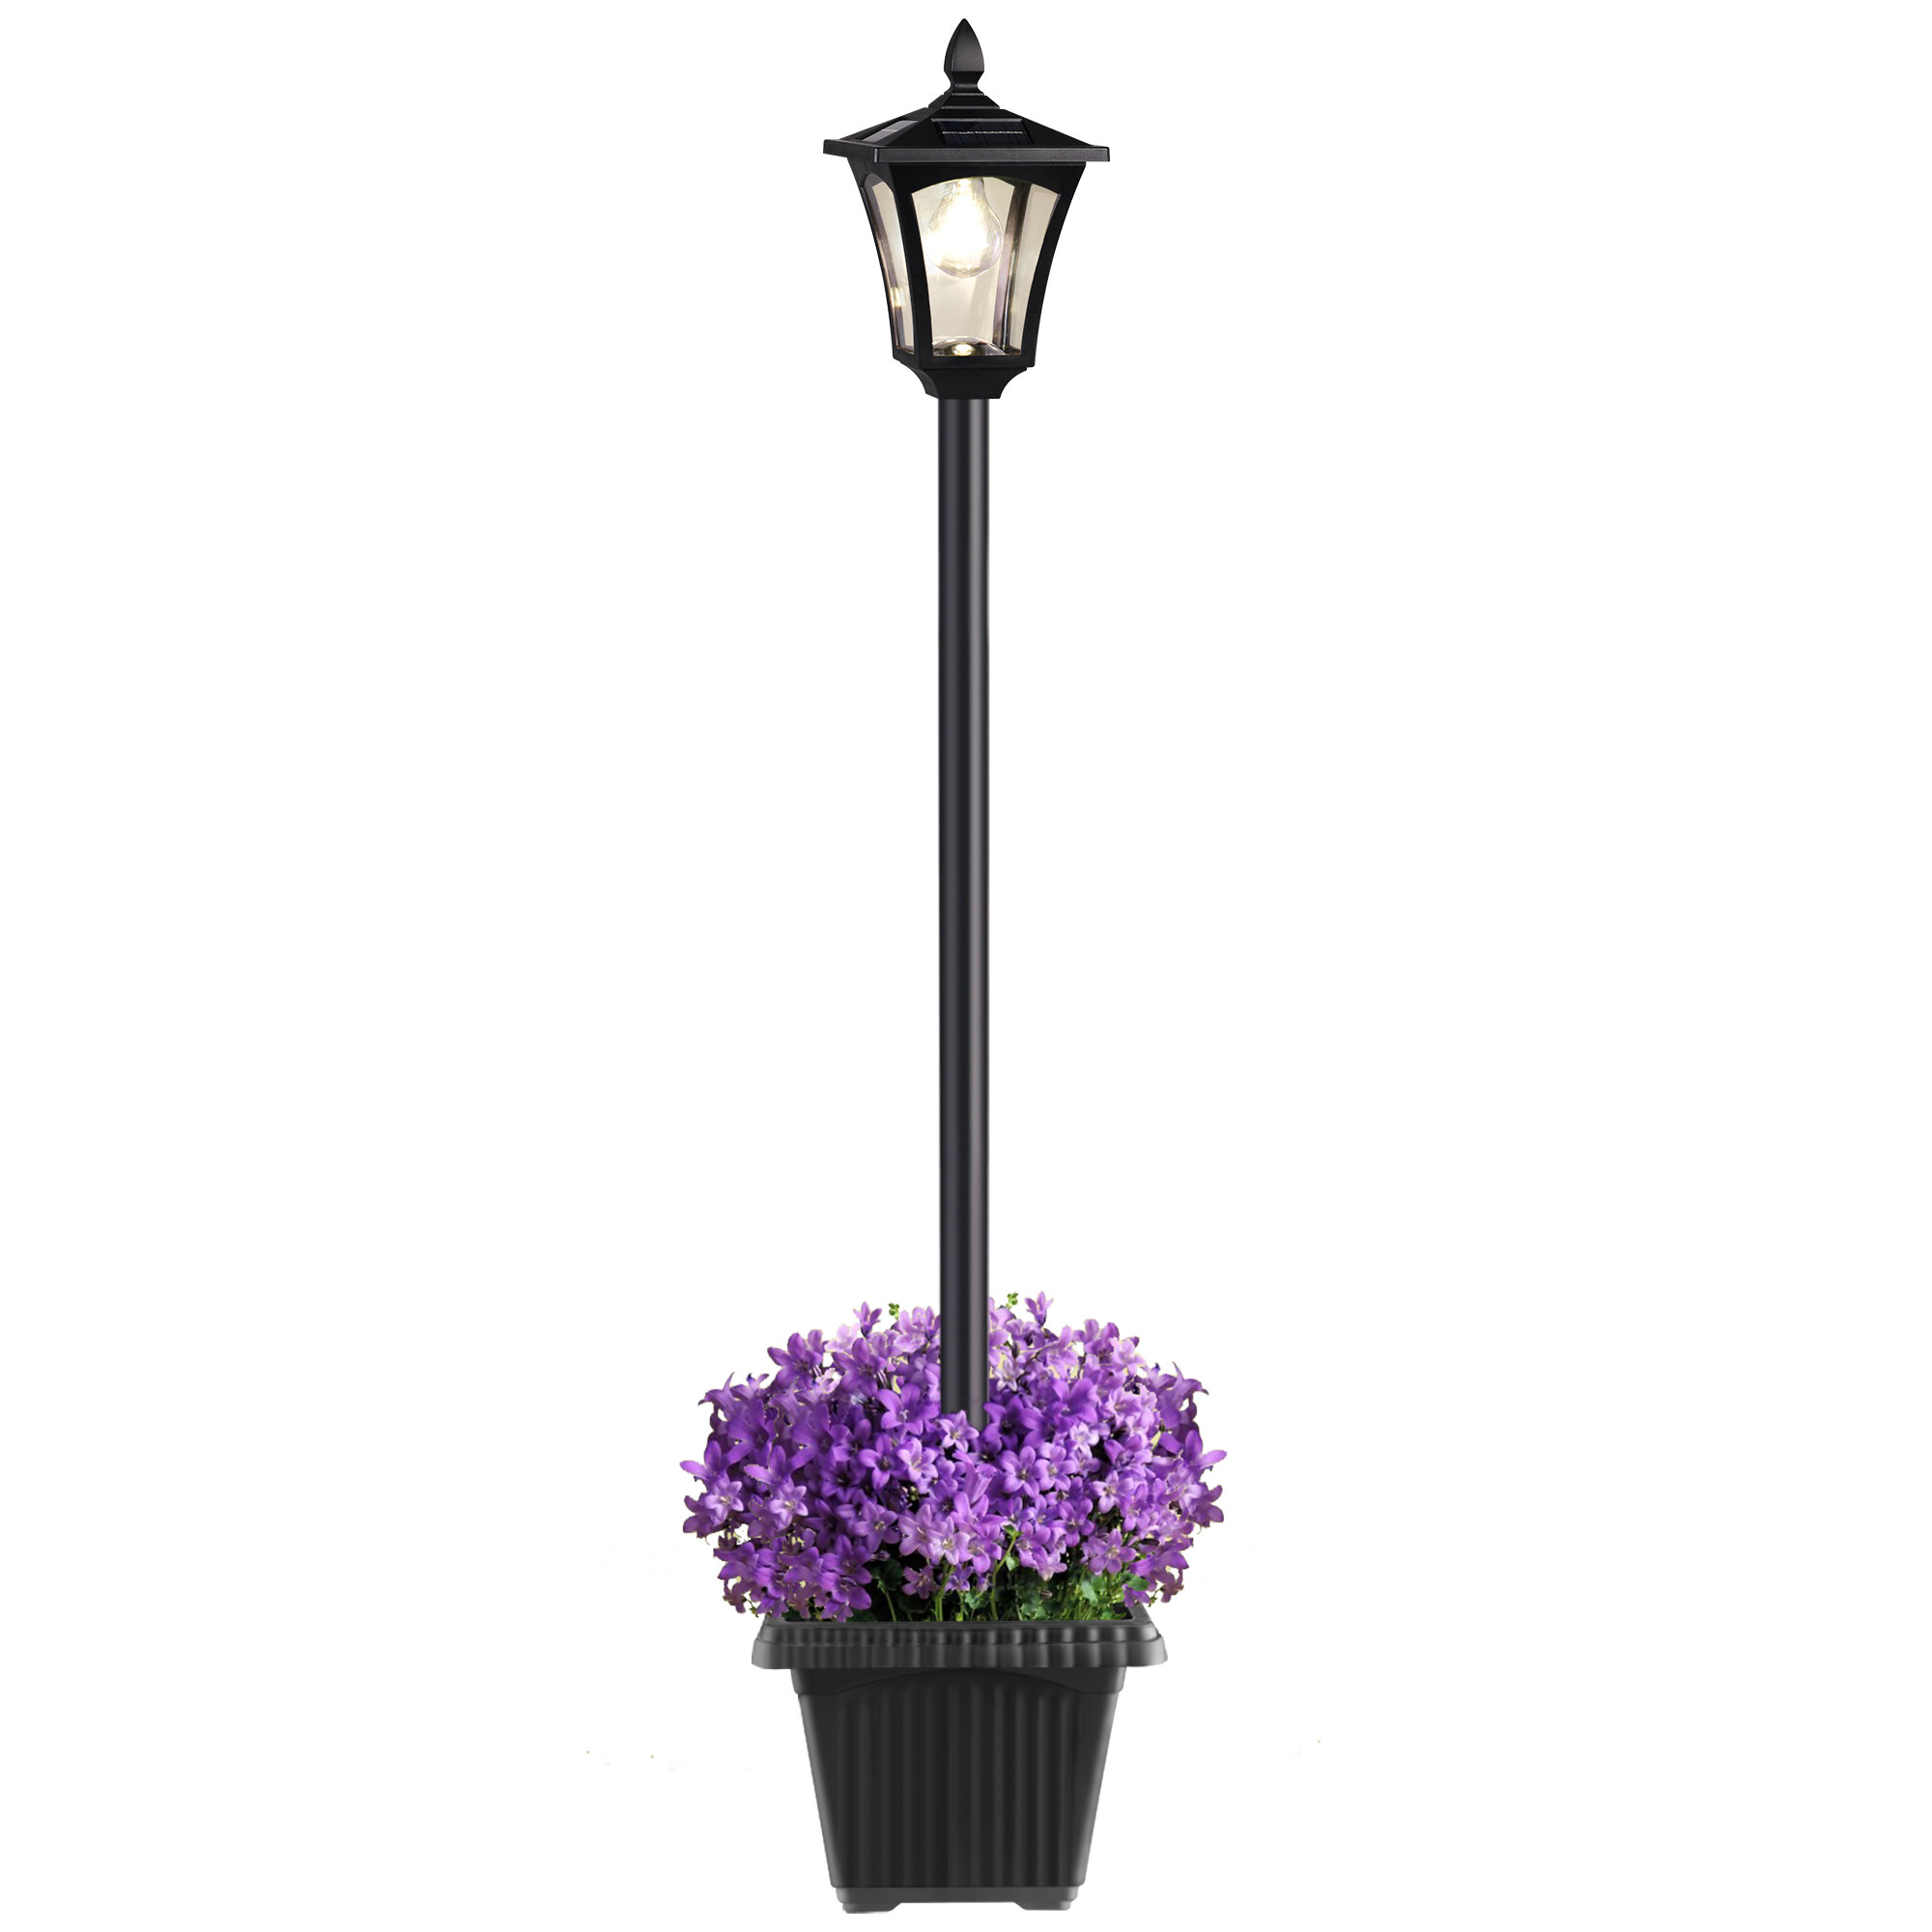 2Pcs Solar Powered Rose Flowers 3 LED Lights Outdoor Garden Yard Lawn Decor Lamp